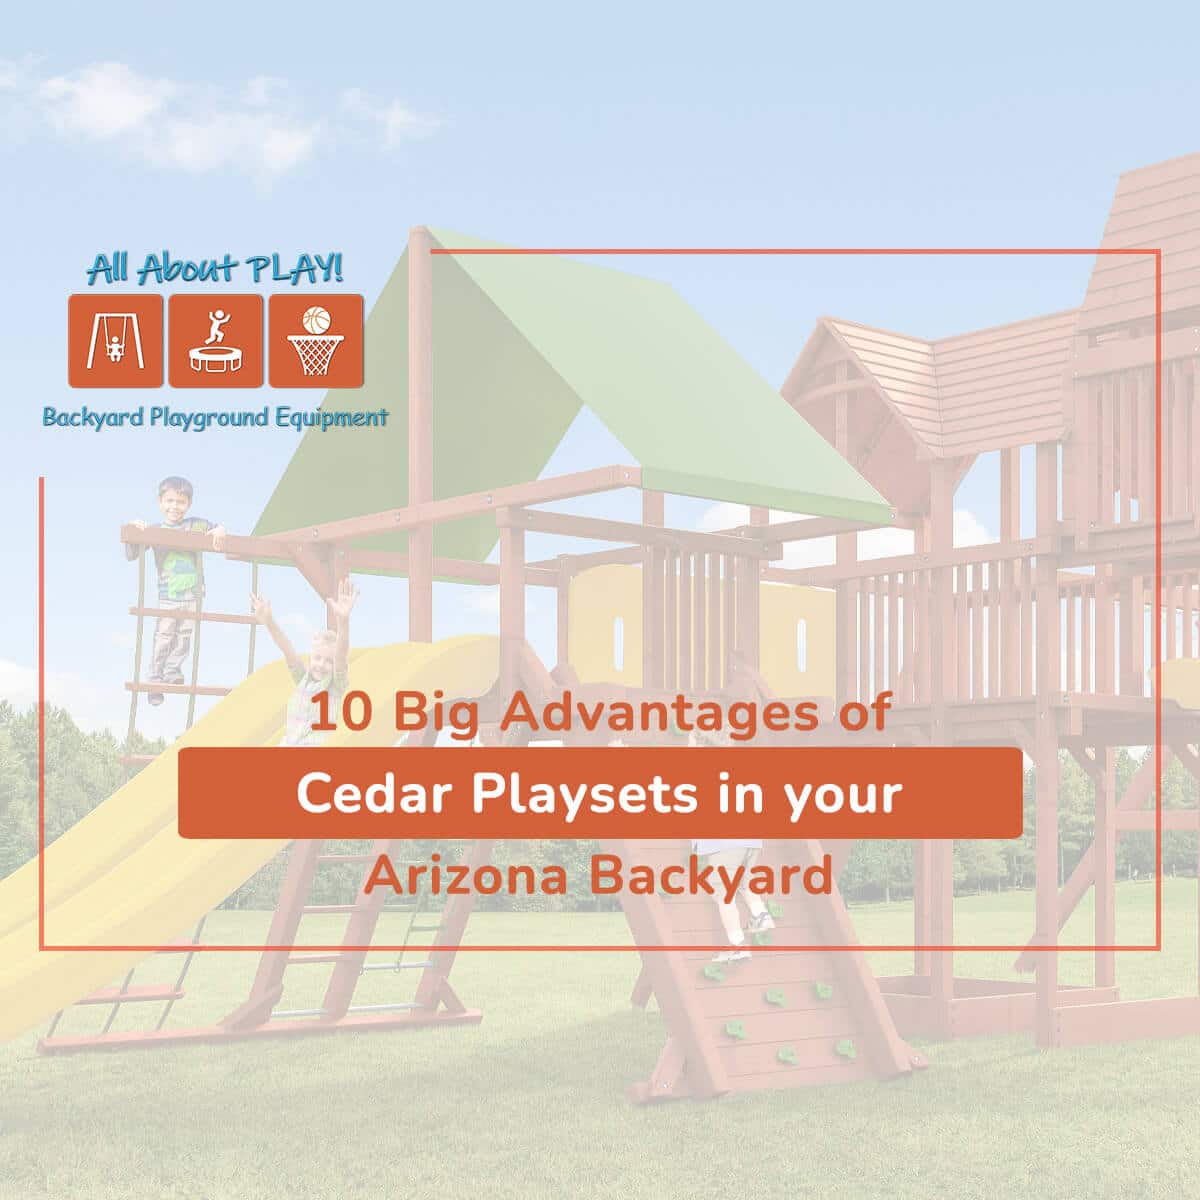 10 Big Advantages of Cedar Playsets in Your Arizona Backyard